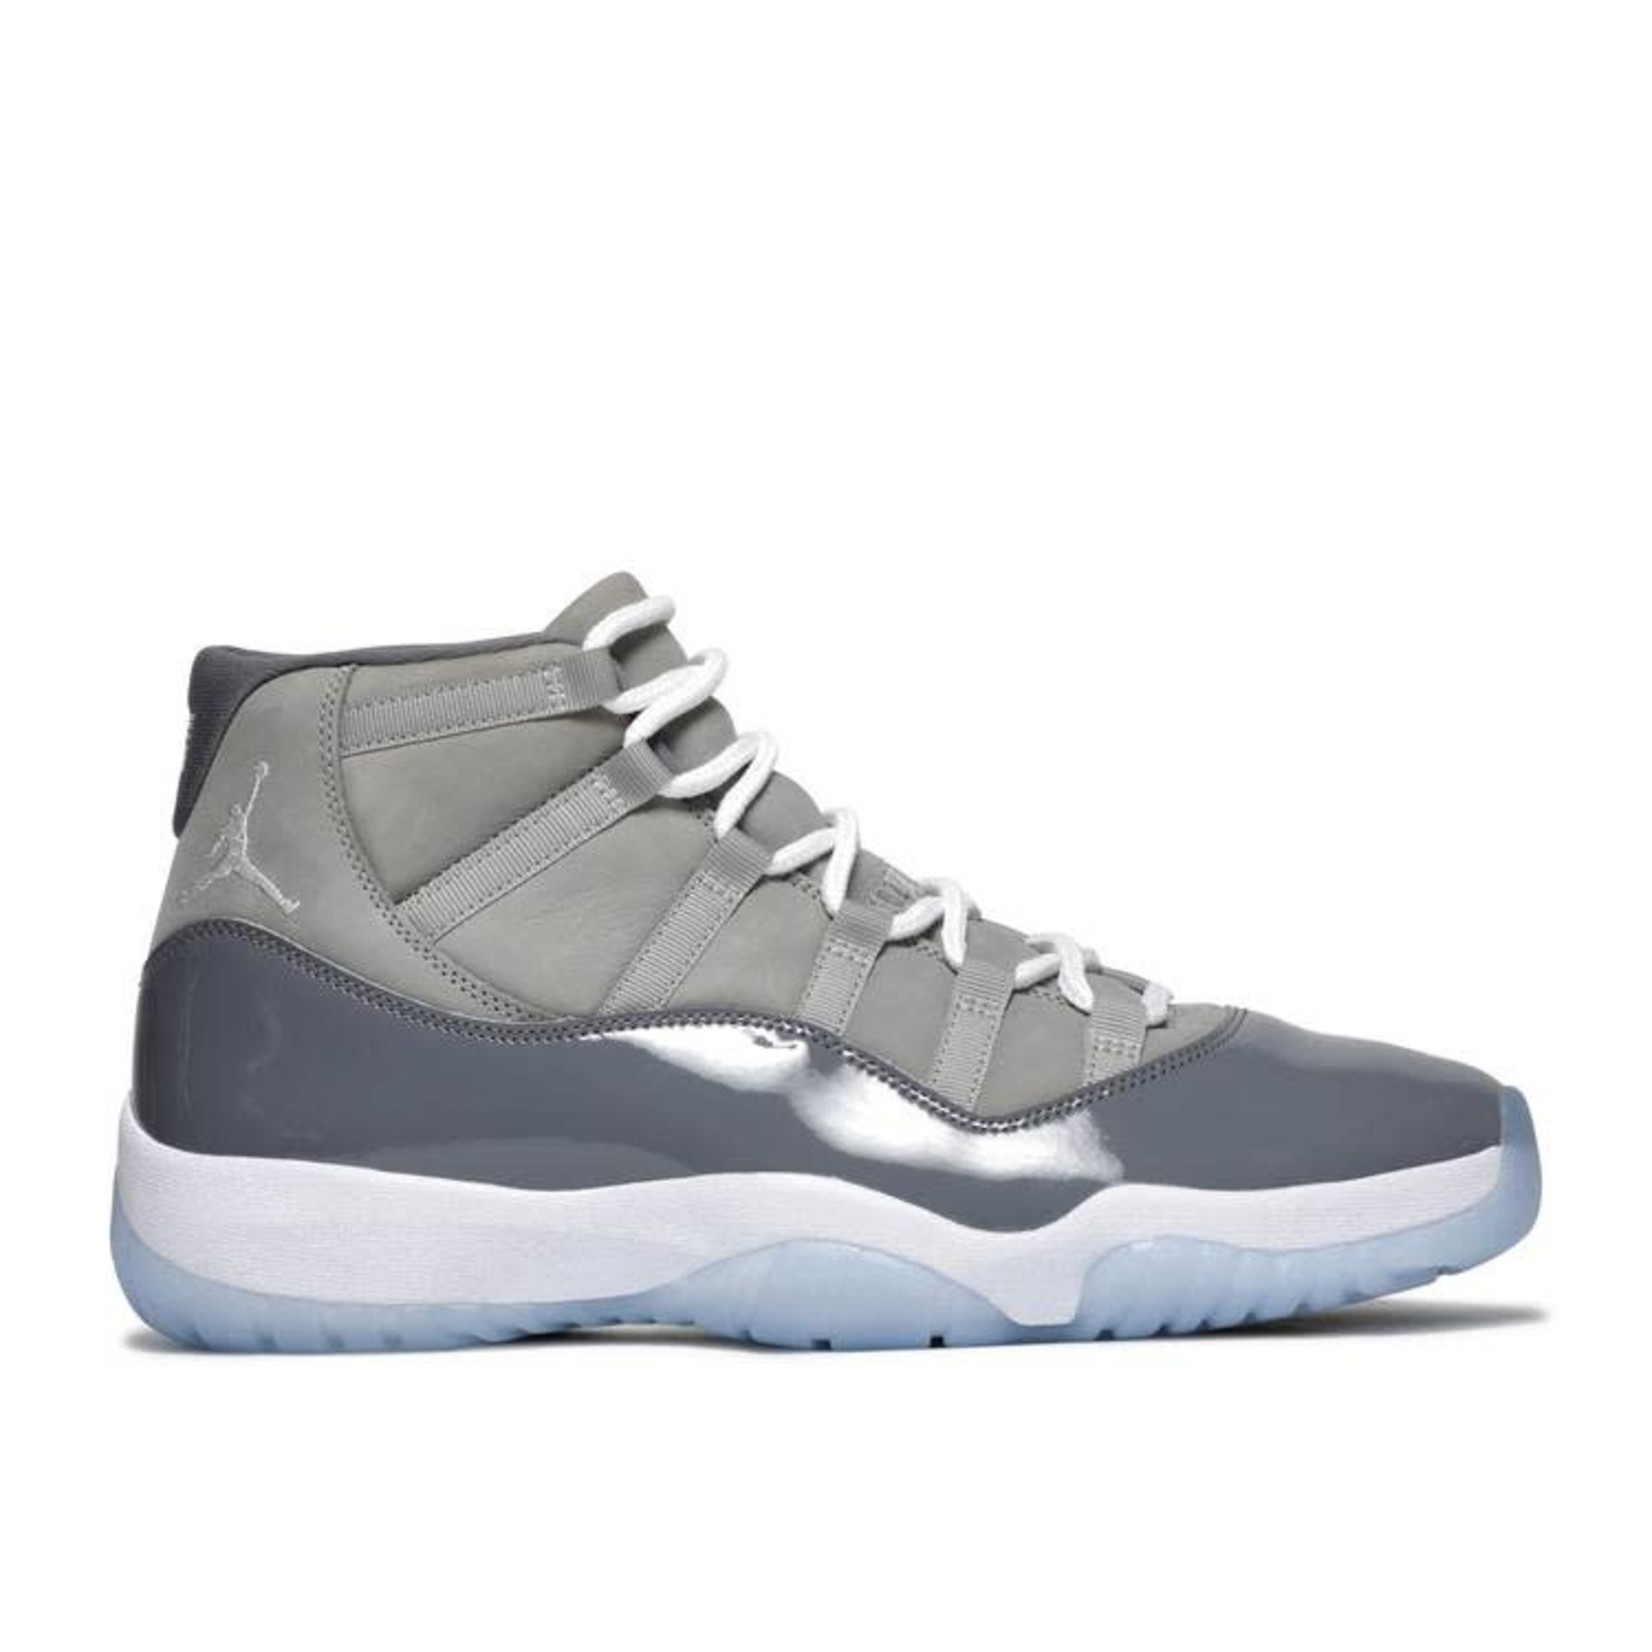 Jordan Jordan 11 Retro Cool Grey (2021) Size 8.5, DS BRAND NEW